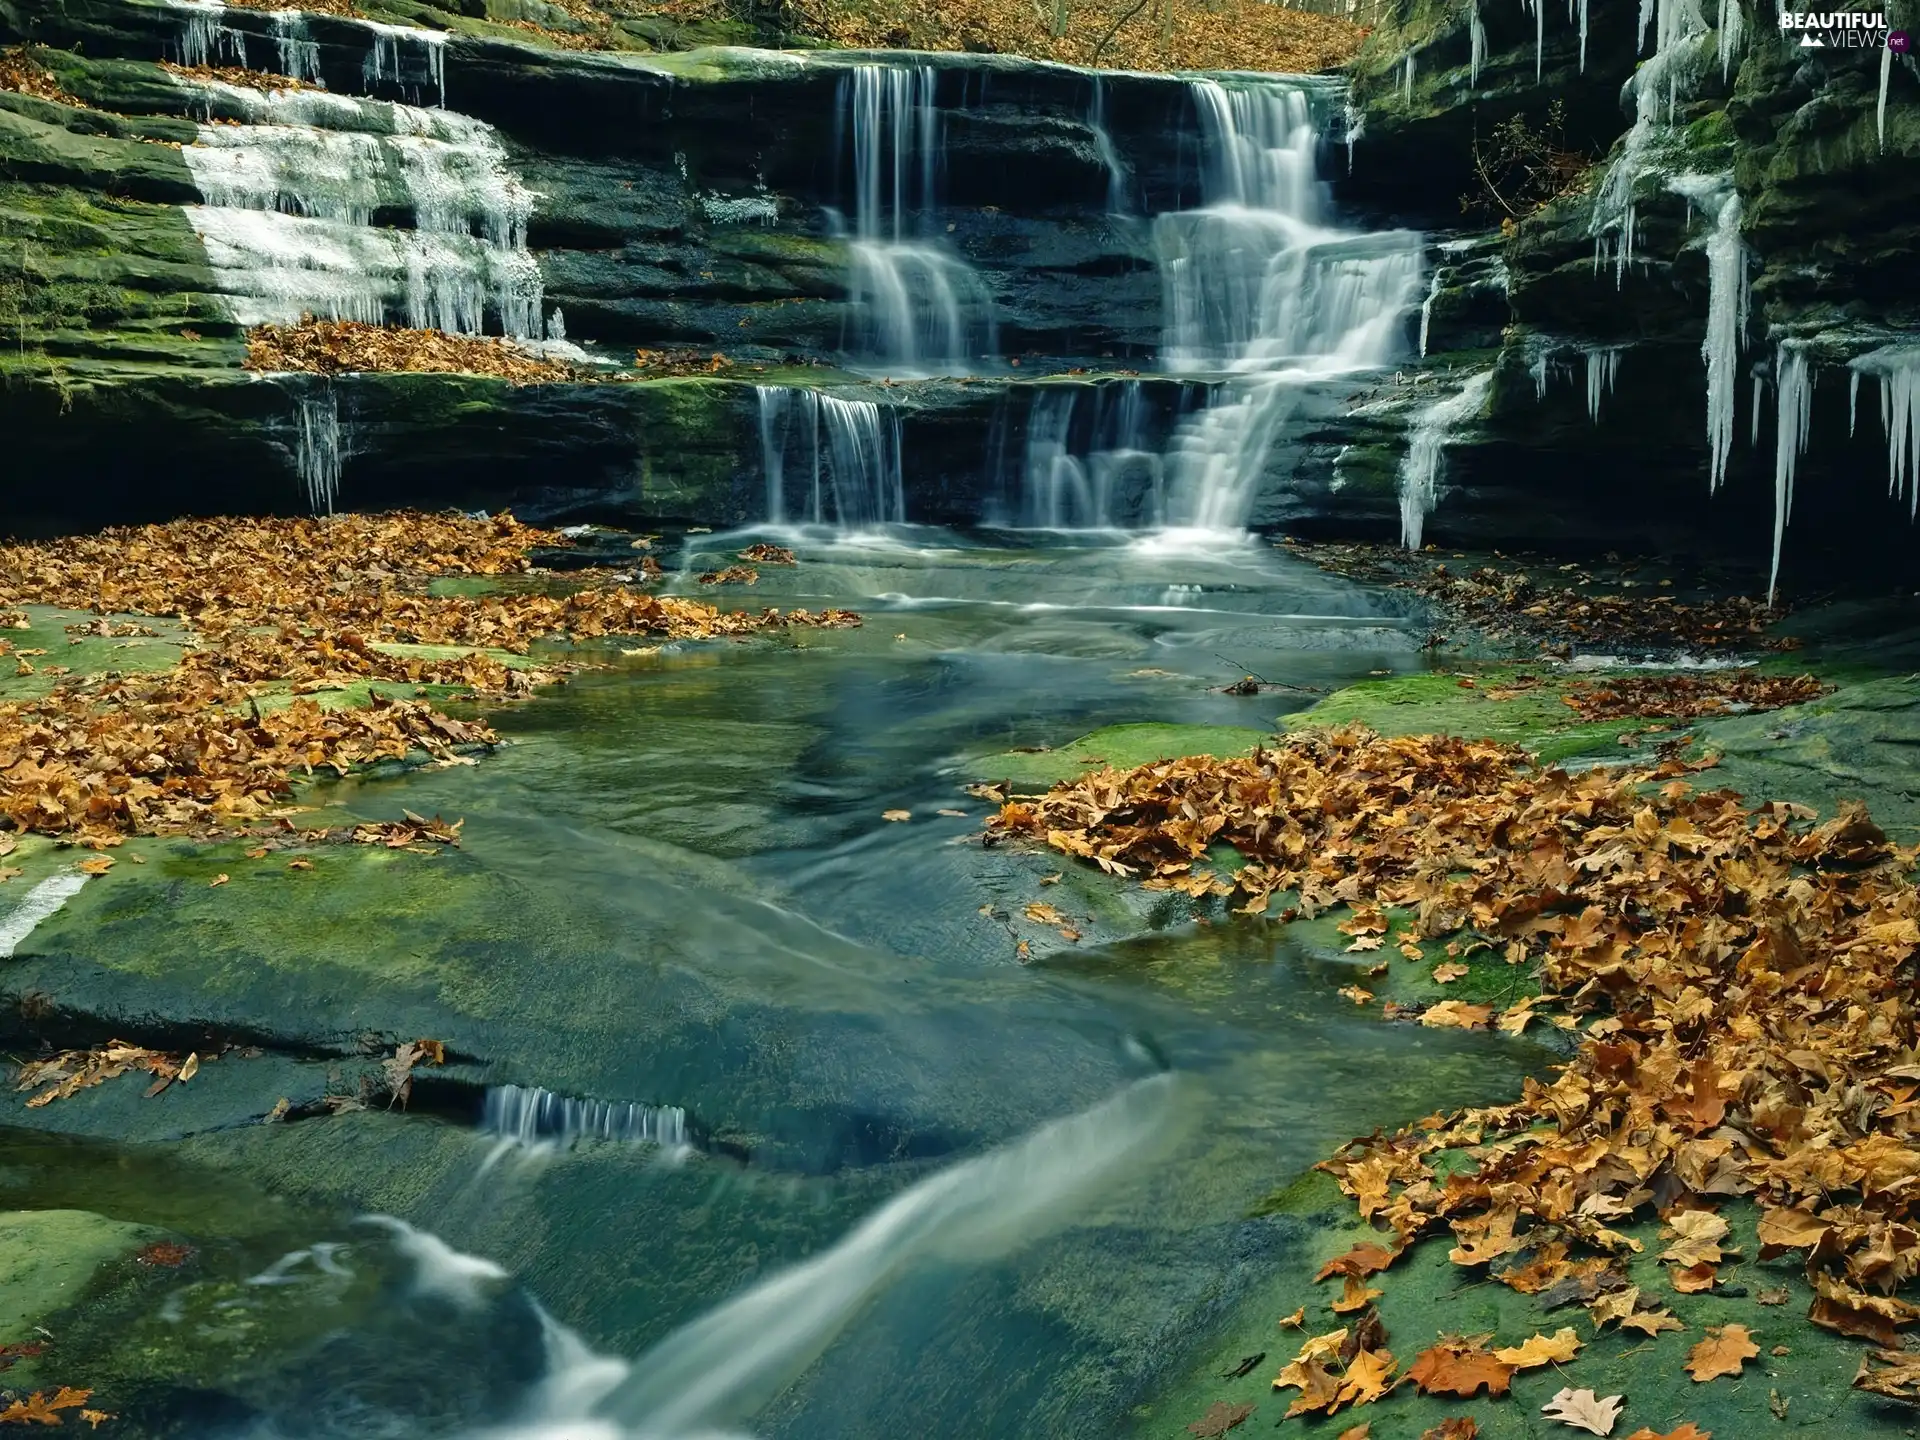 Leaf, rocks, waterfall